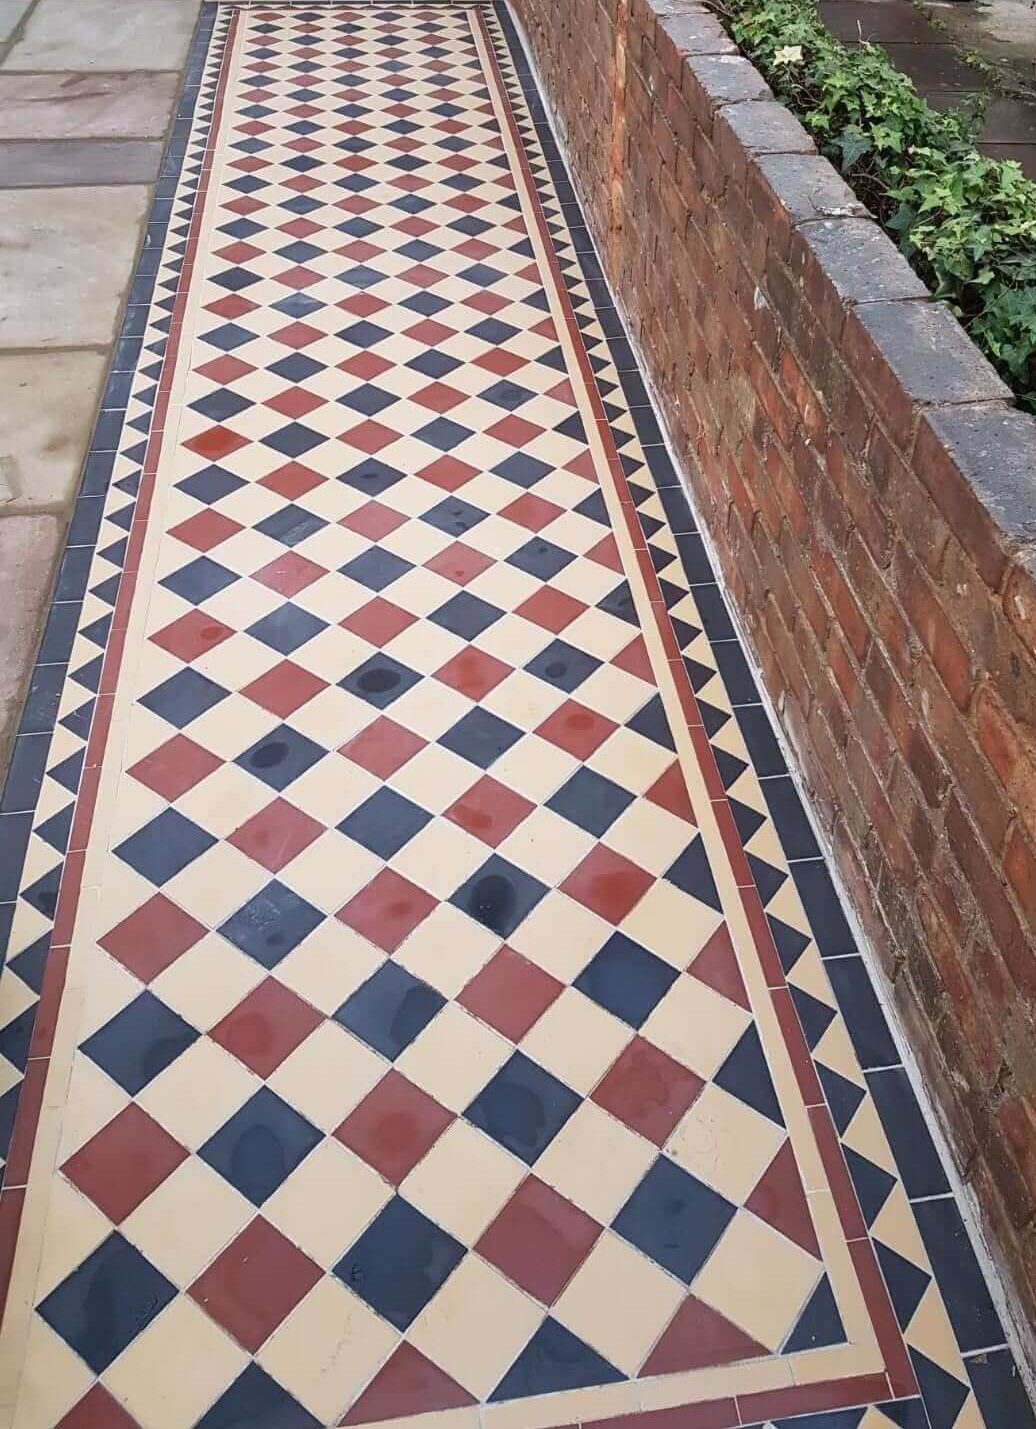  Edwardian Path Tile Installation Company West Wickham BR4